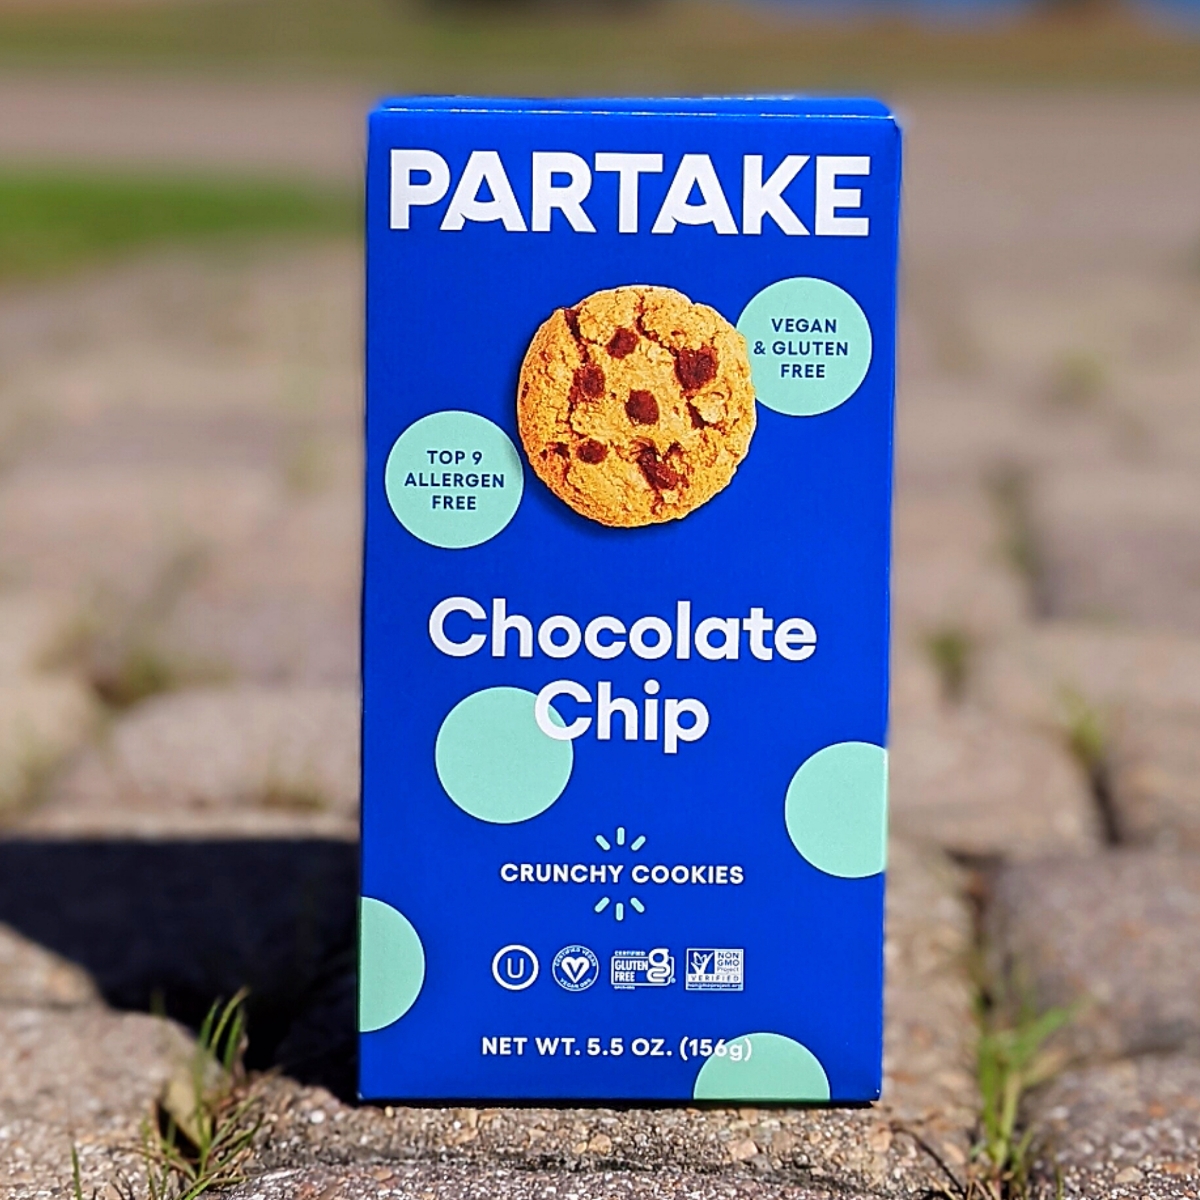 Trader Joe’s Partake Chocolate Chip Cookies